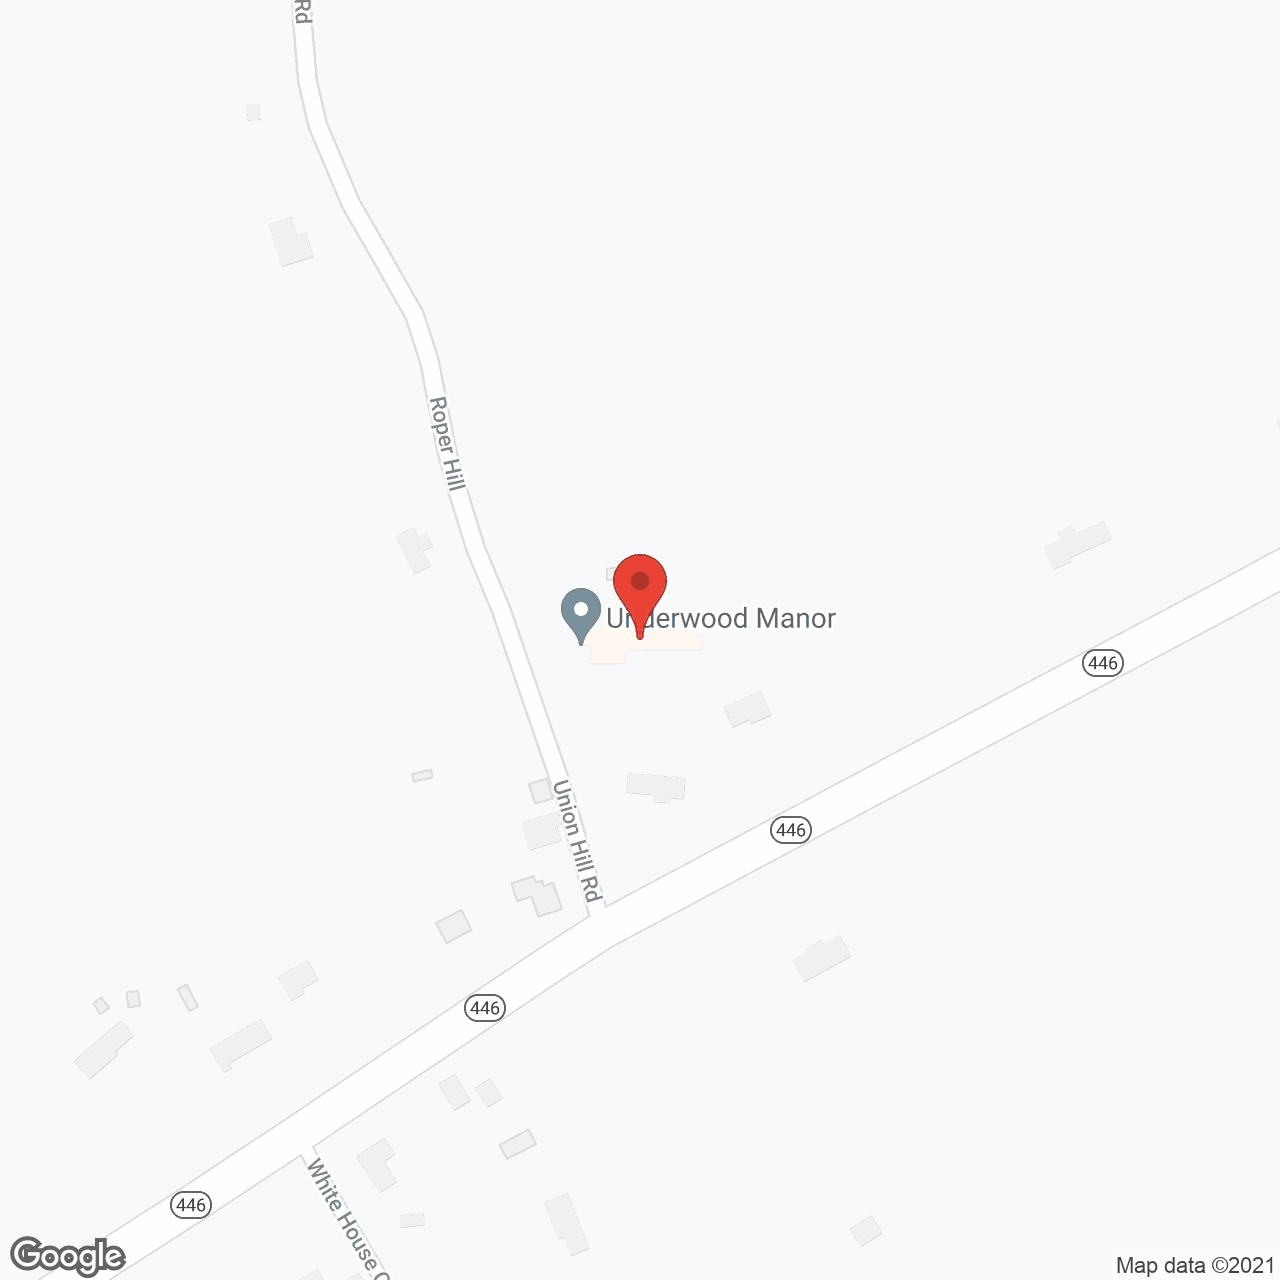 Underwood Manor in google map